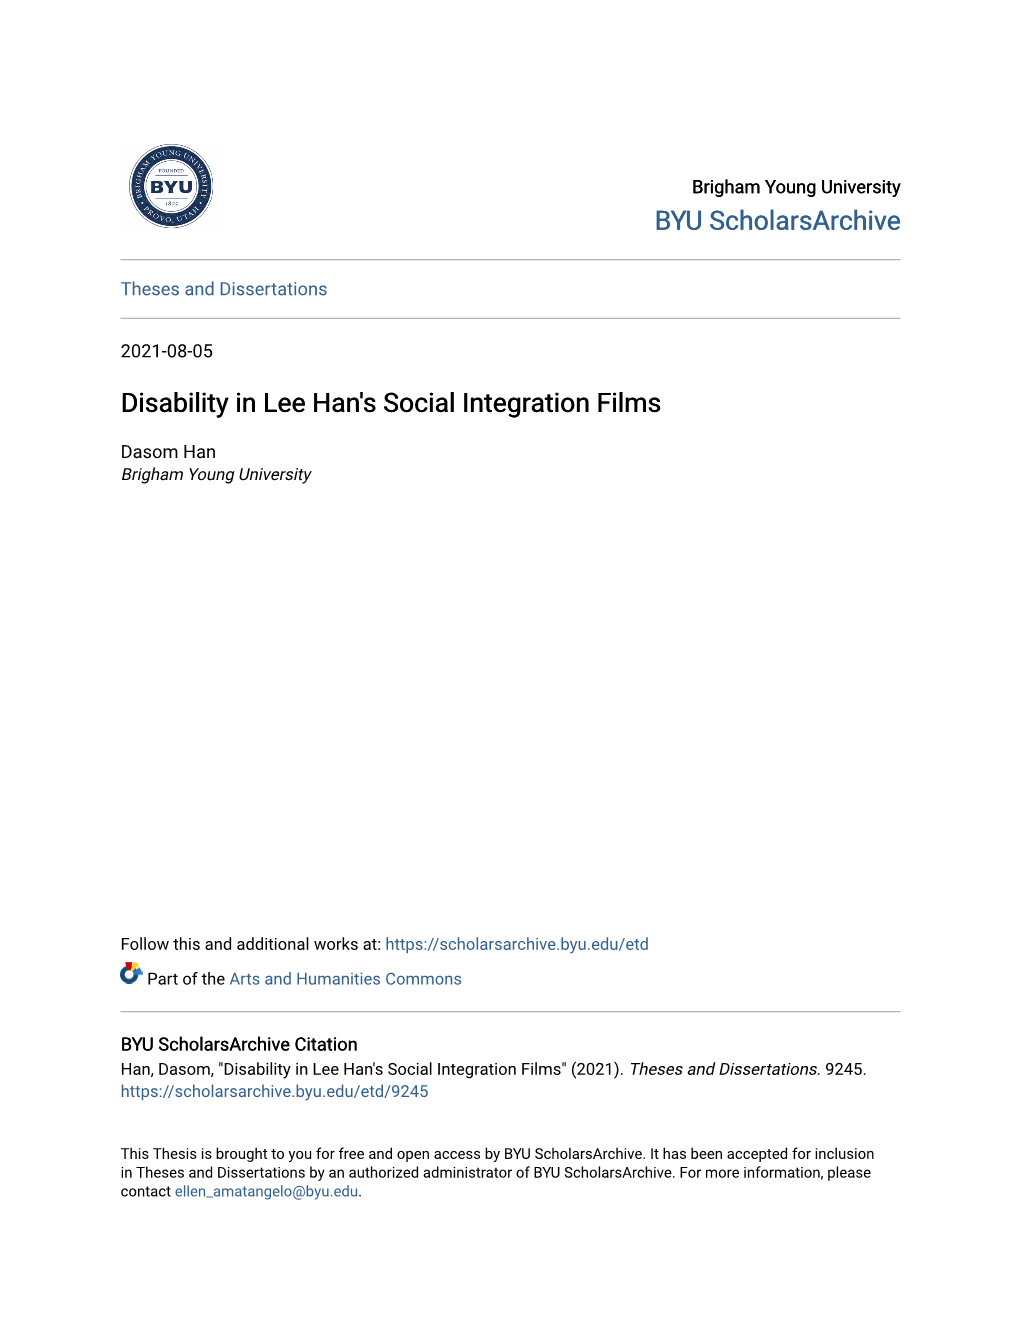 Disability in Lee Han's Social Integration Films